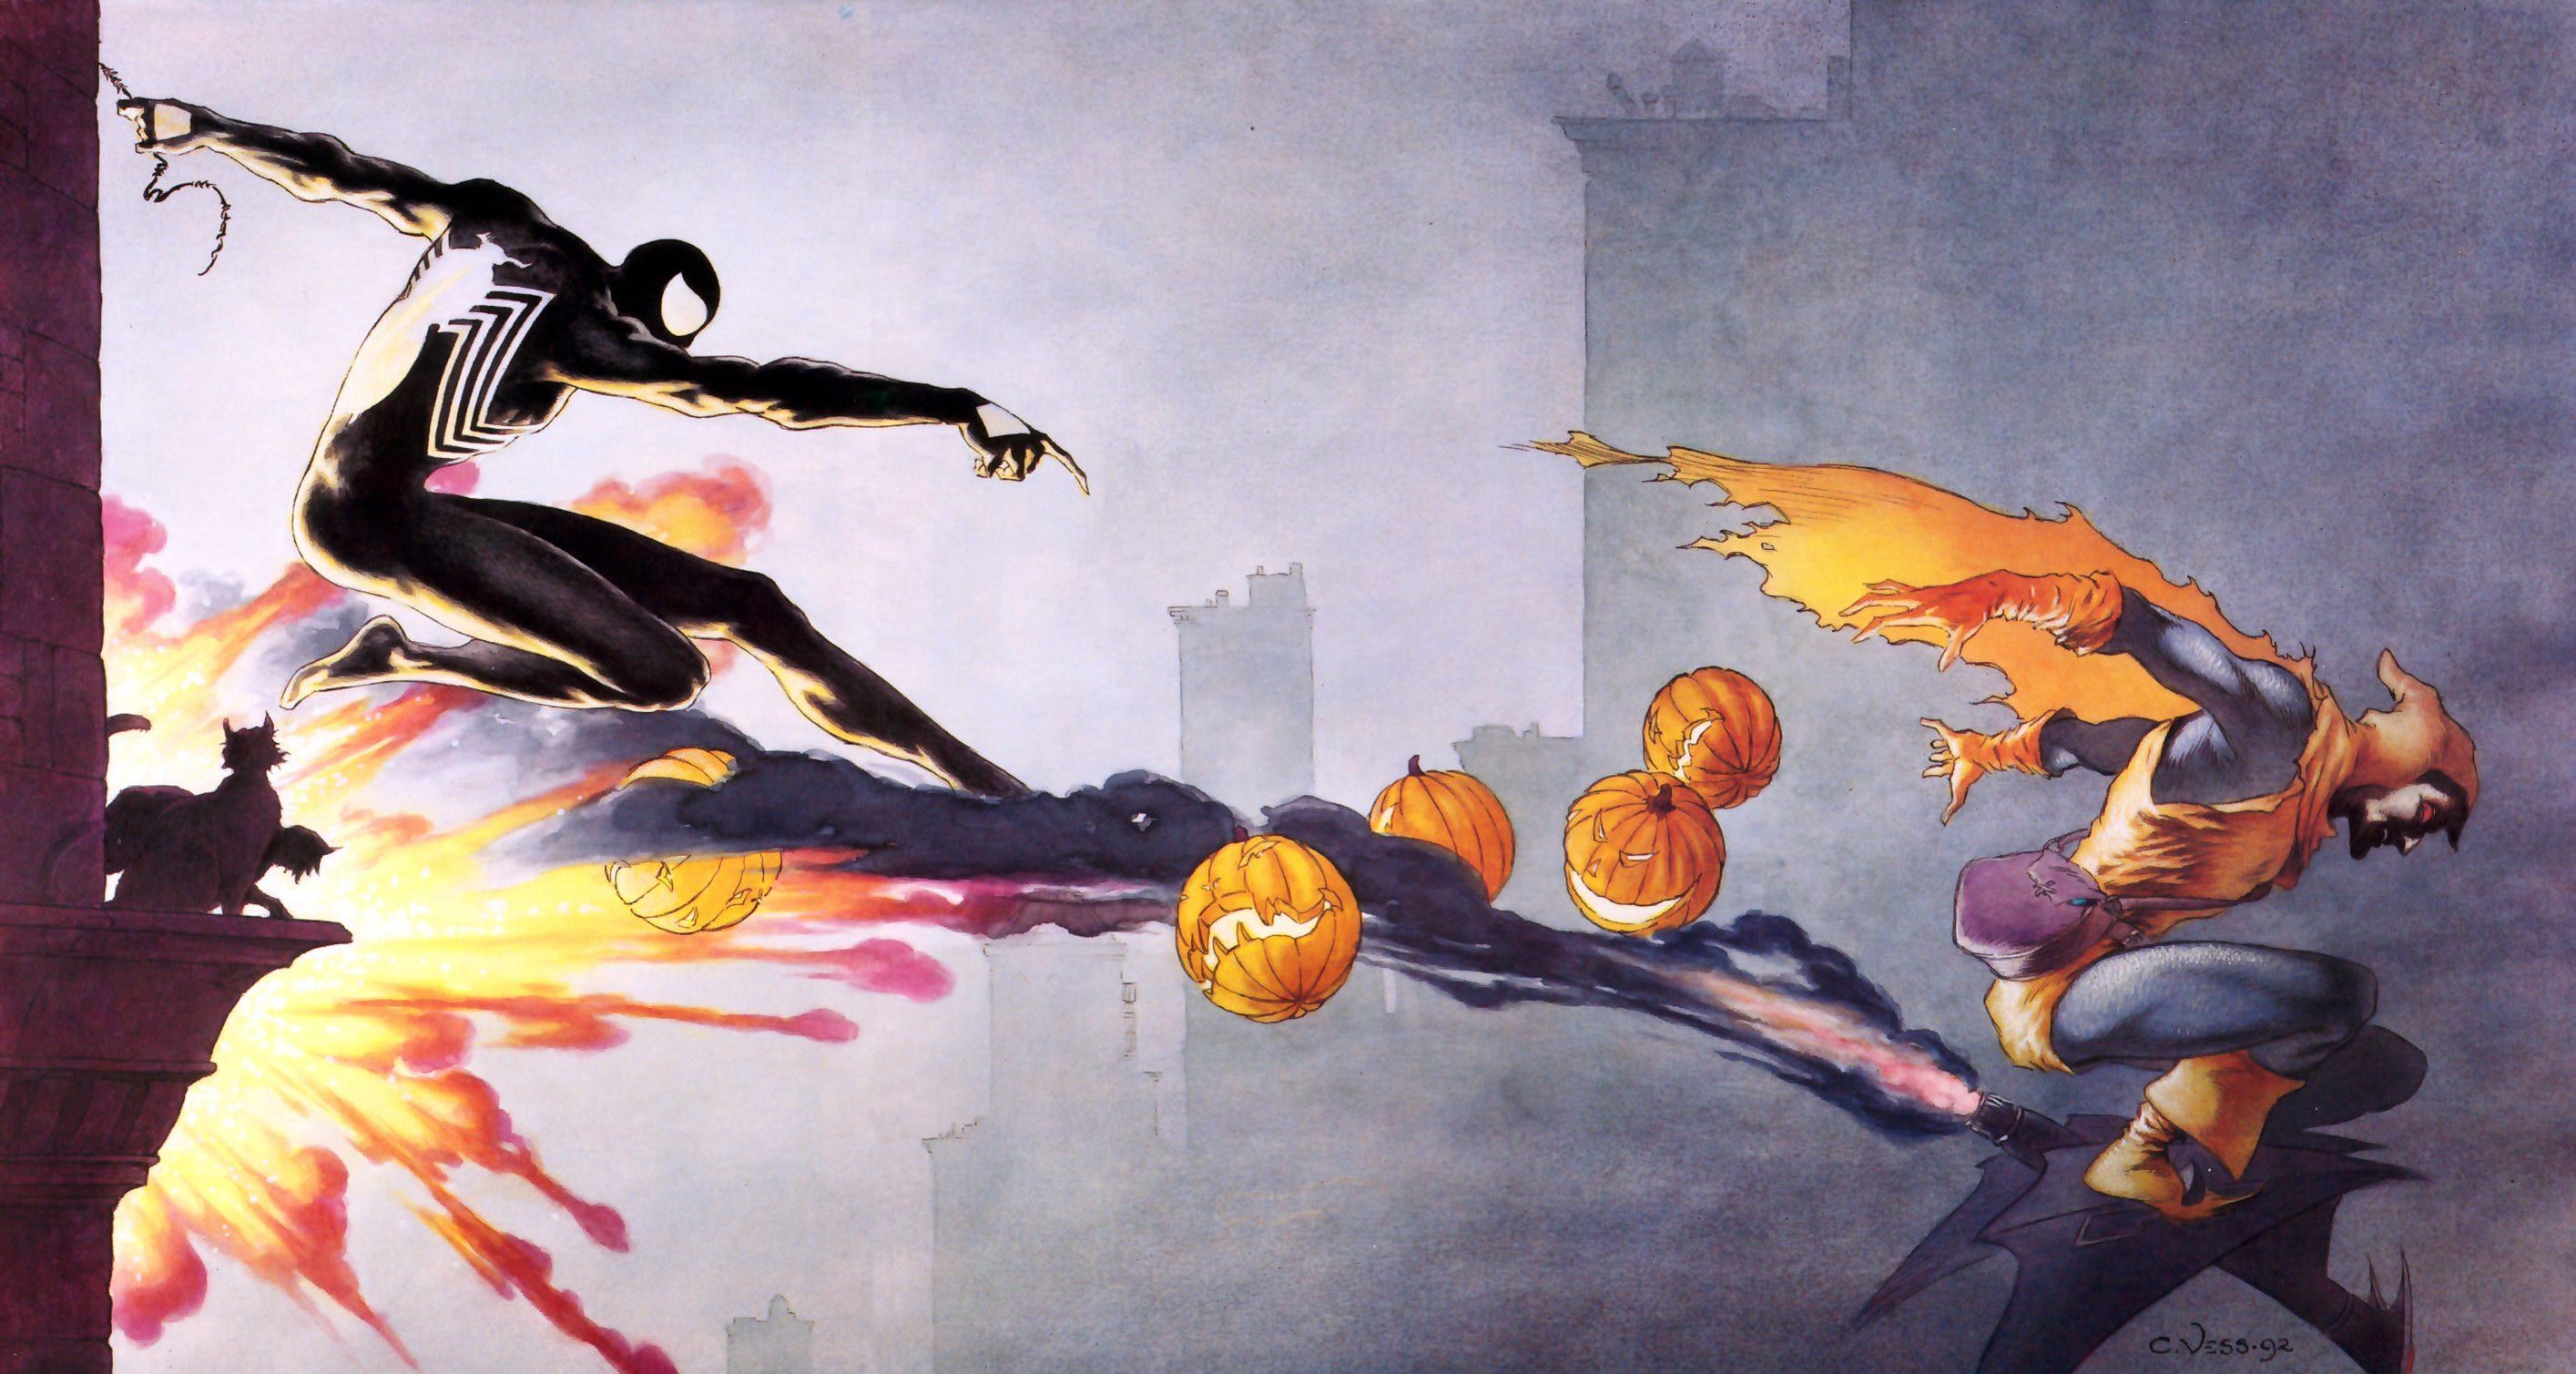 Comics Spider-Man HD Wallpaper by Charles Vess